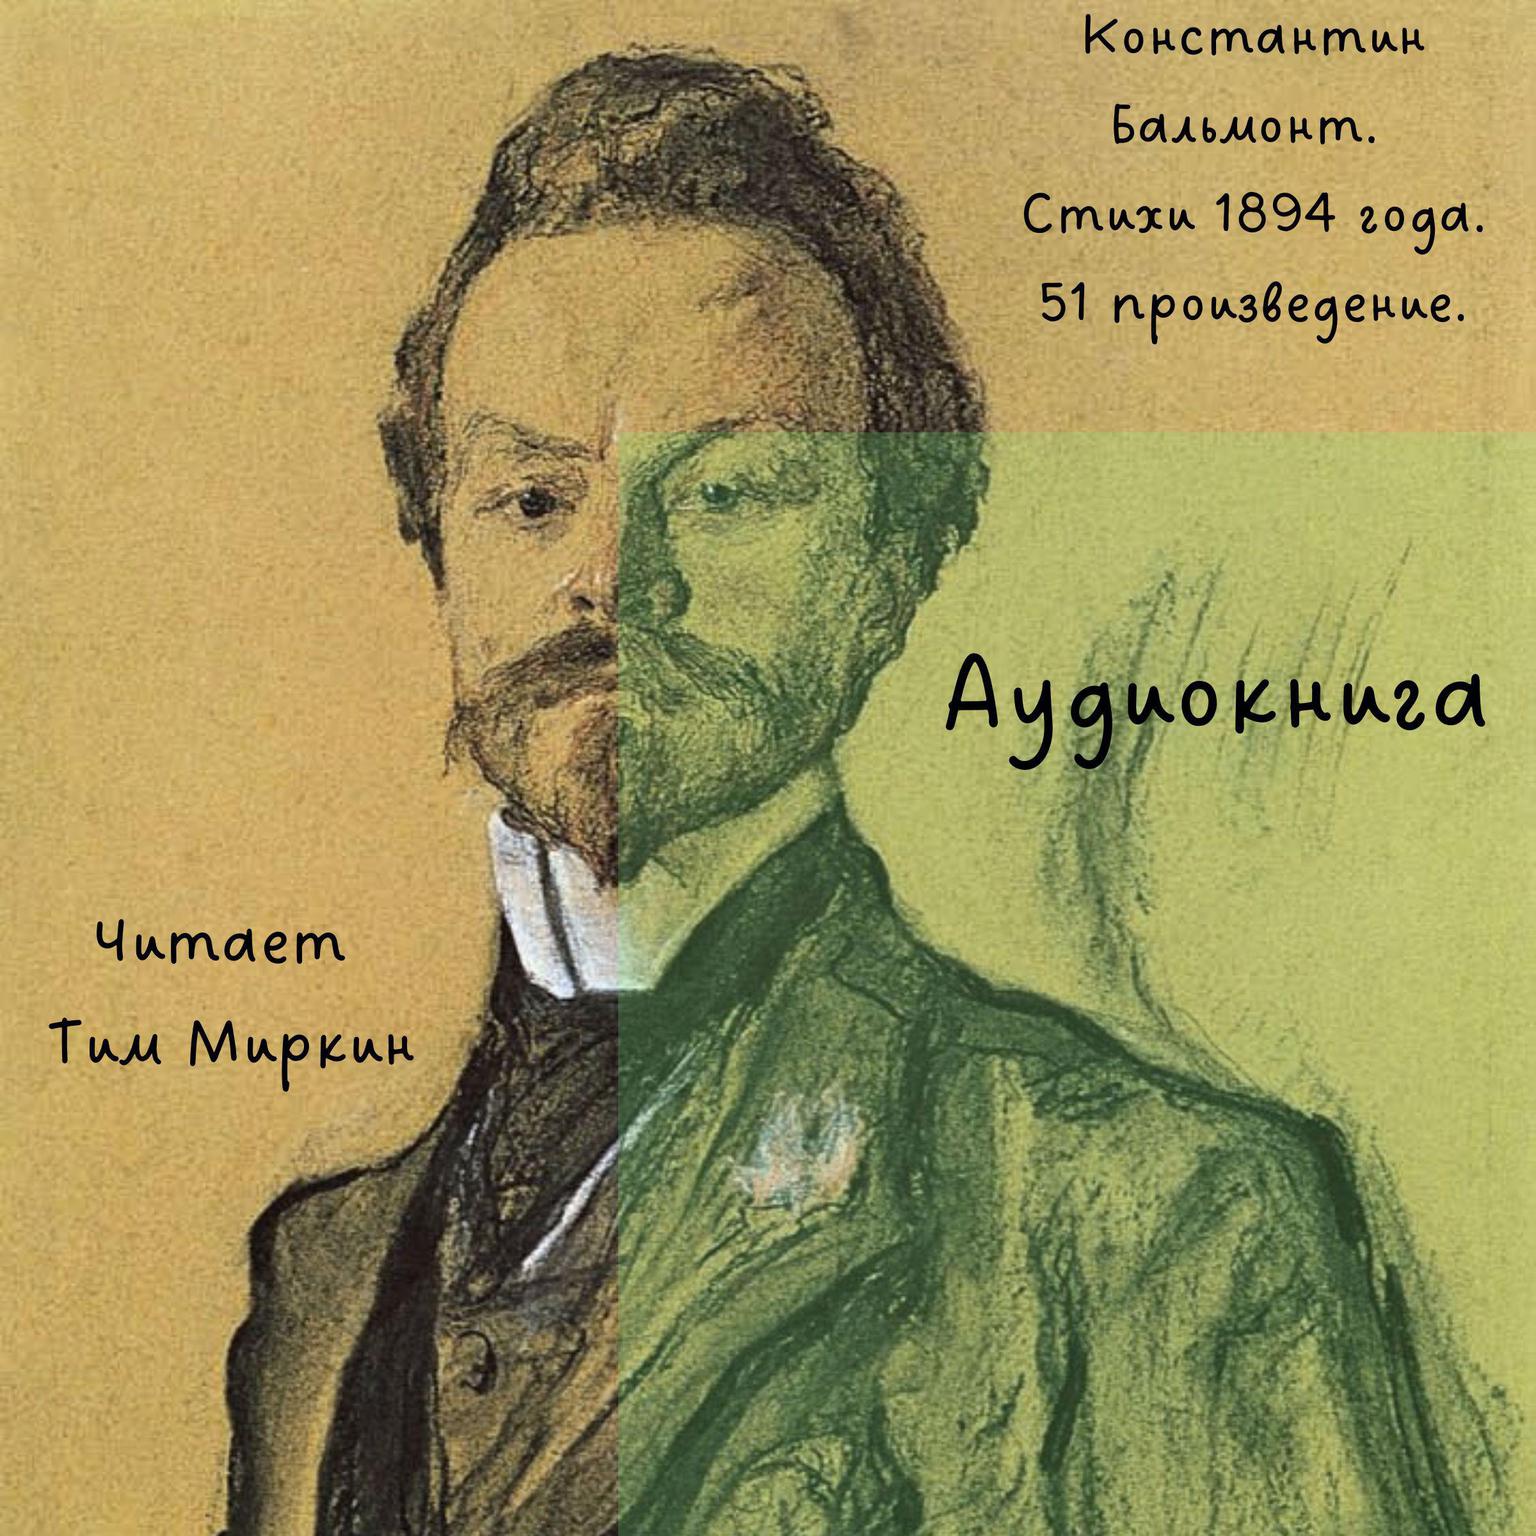 Konstantin Balmont Poetry of year 1894 Audiobook, by Konstantin Balmont